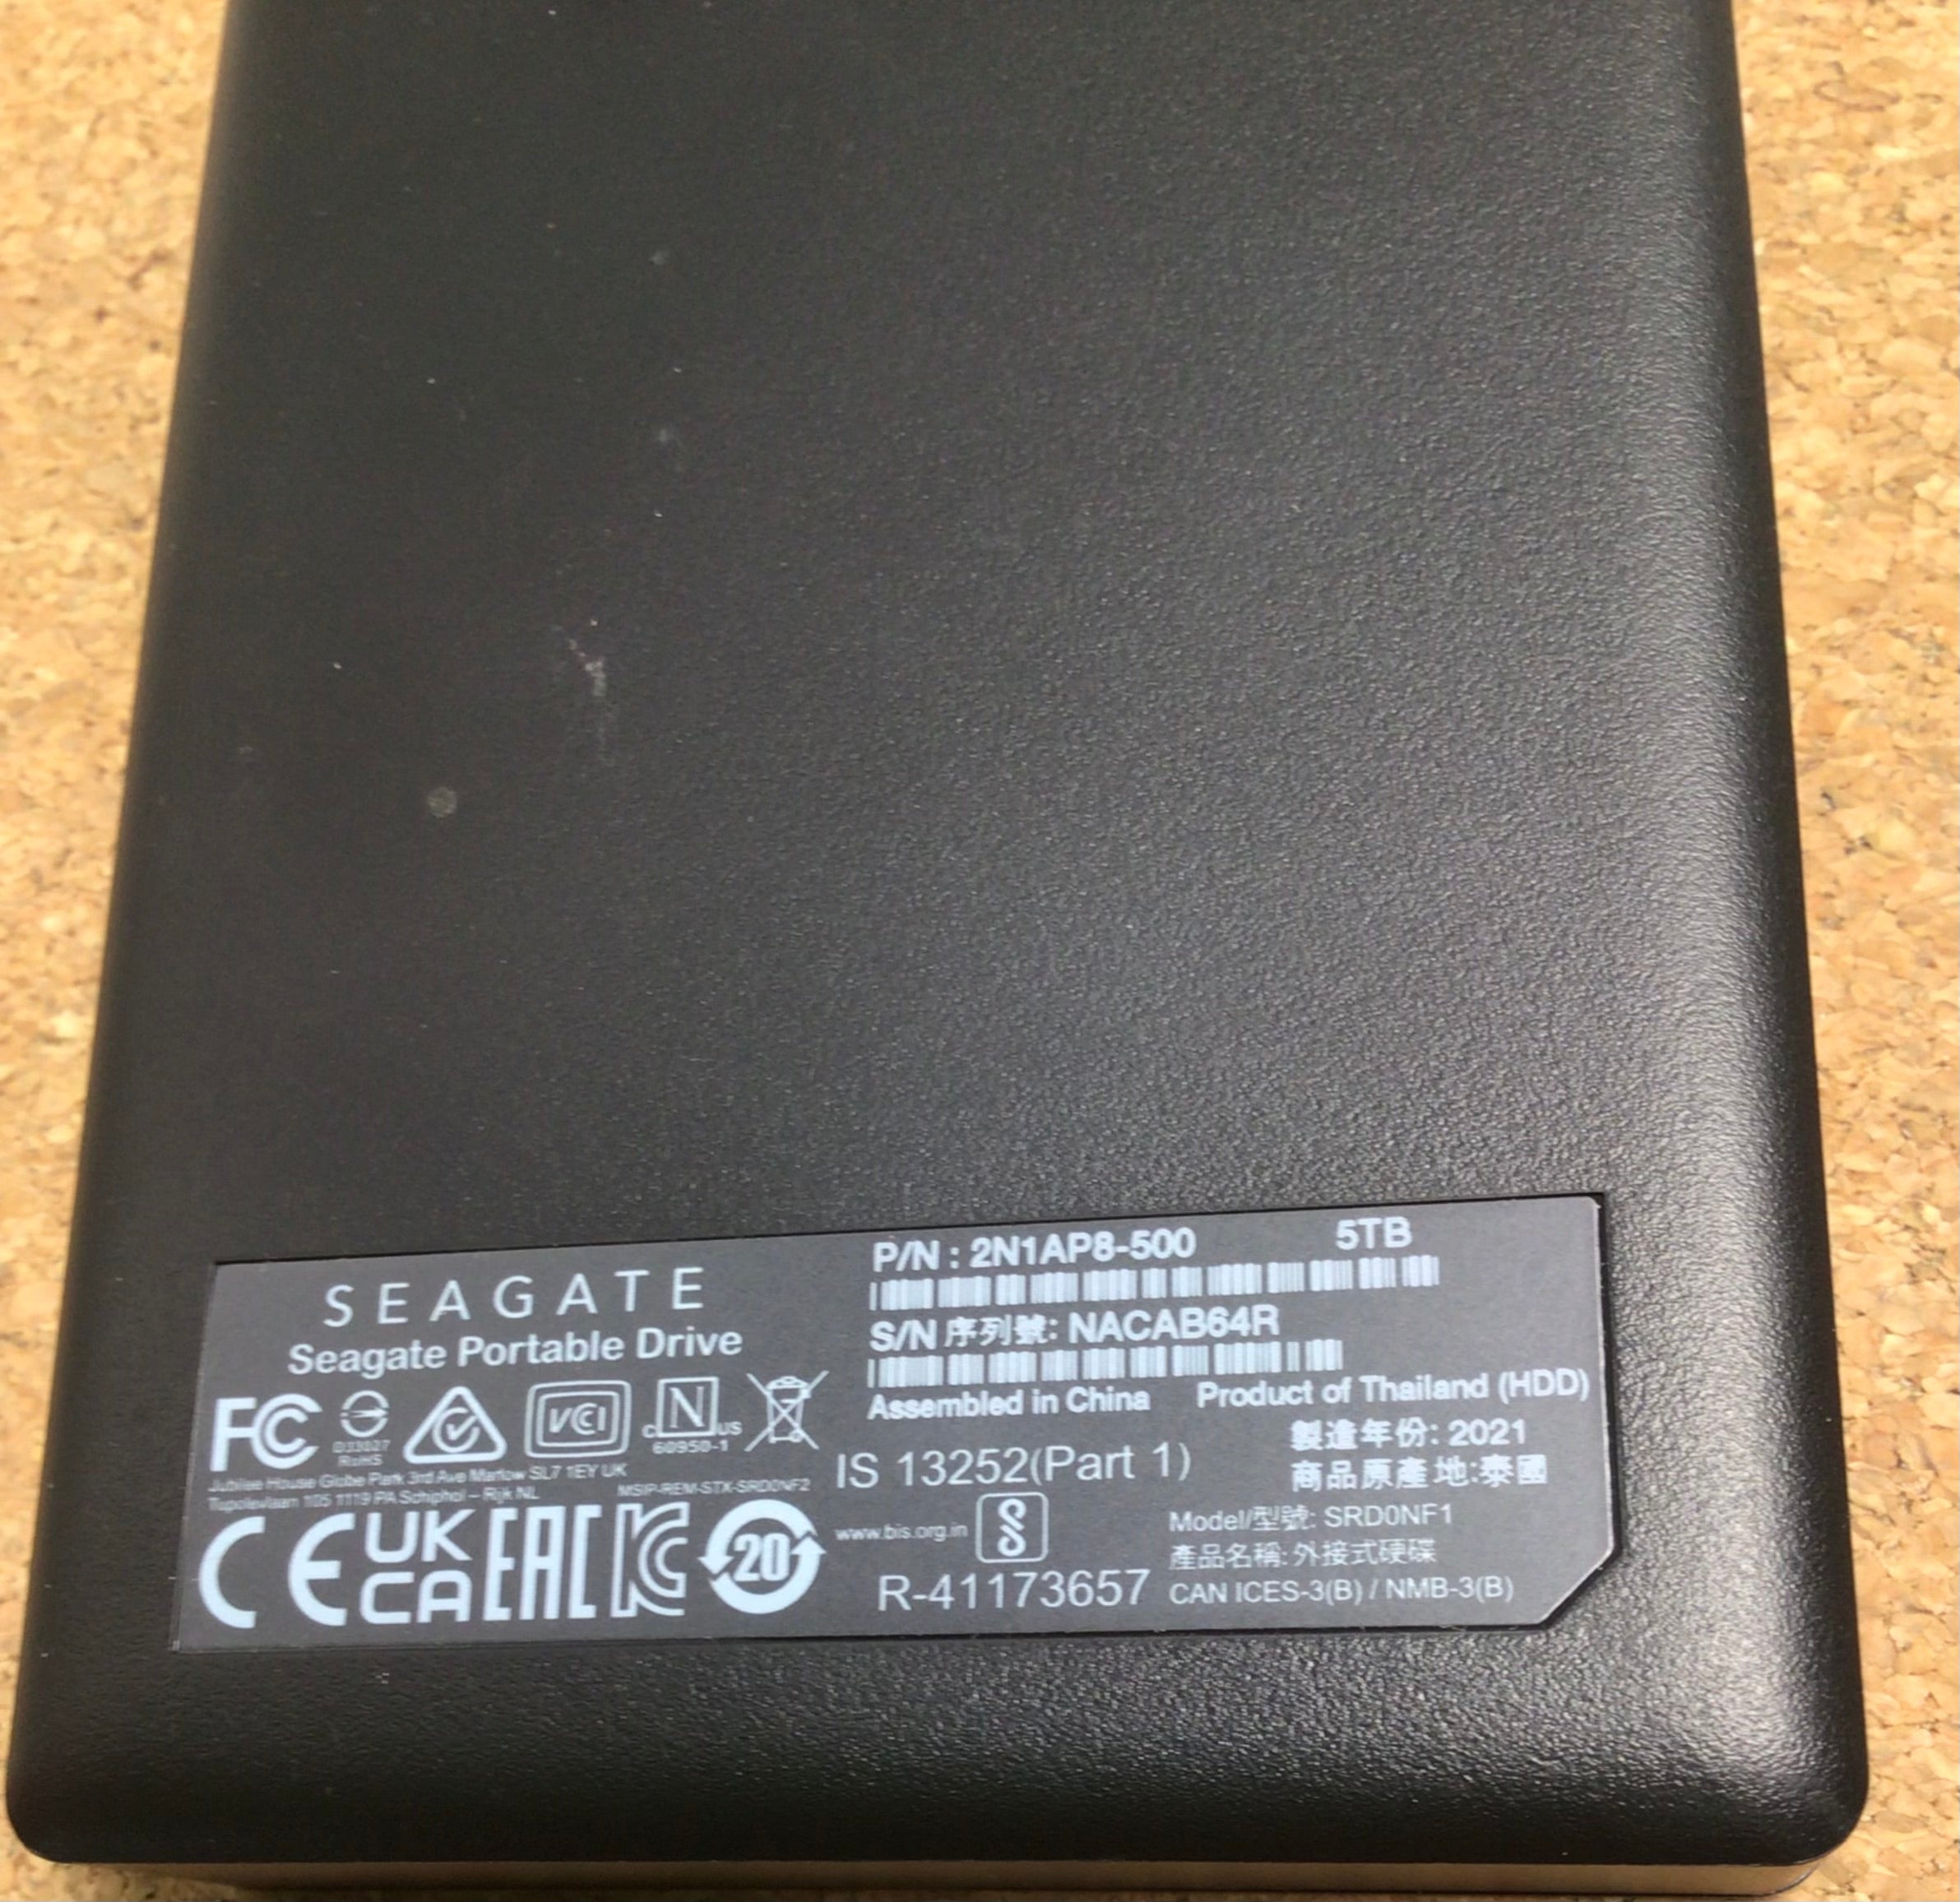 Seagate Portable 5TB External Hard Drive HDD – USB 3.0 (STGX5000400), Black (7947231232238)